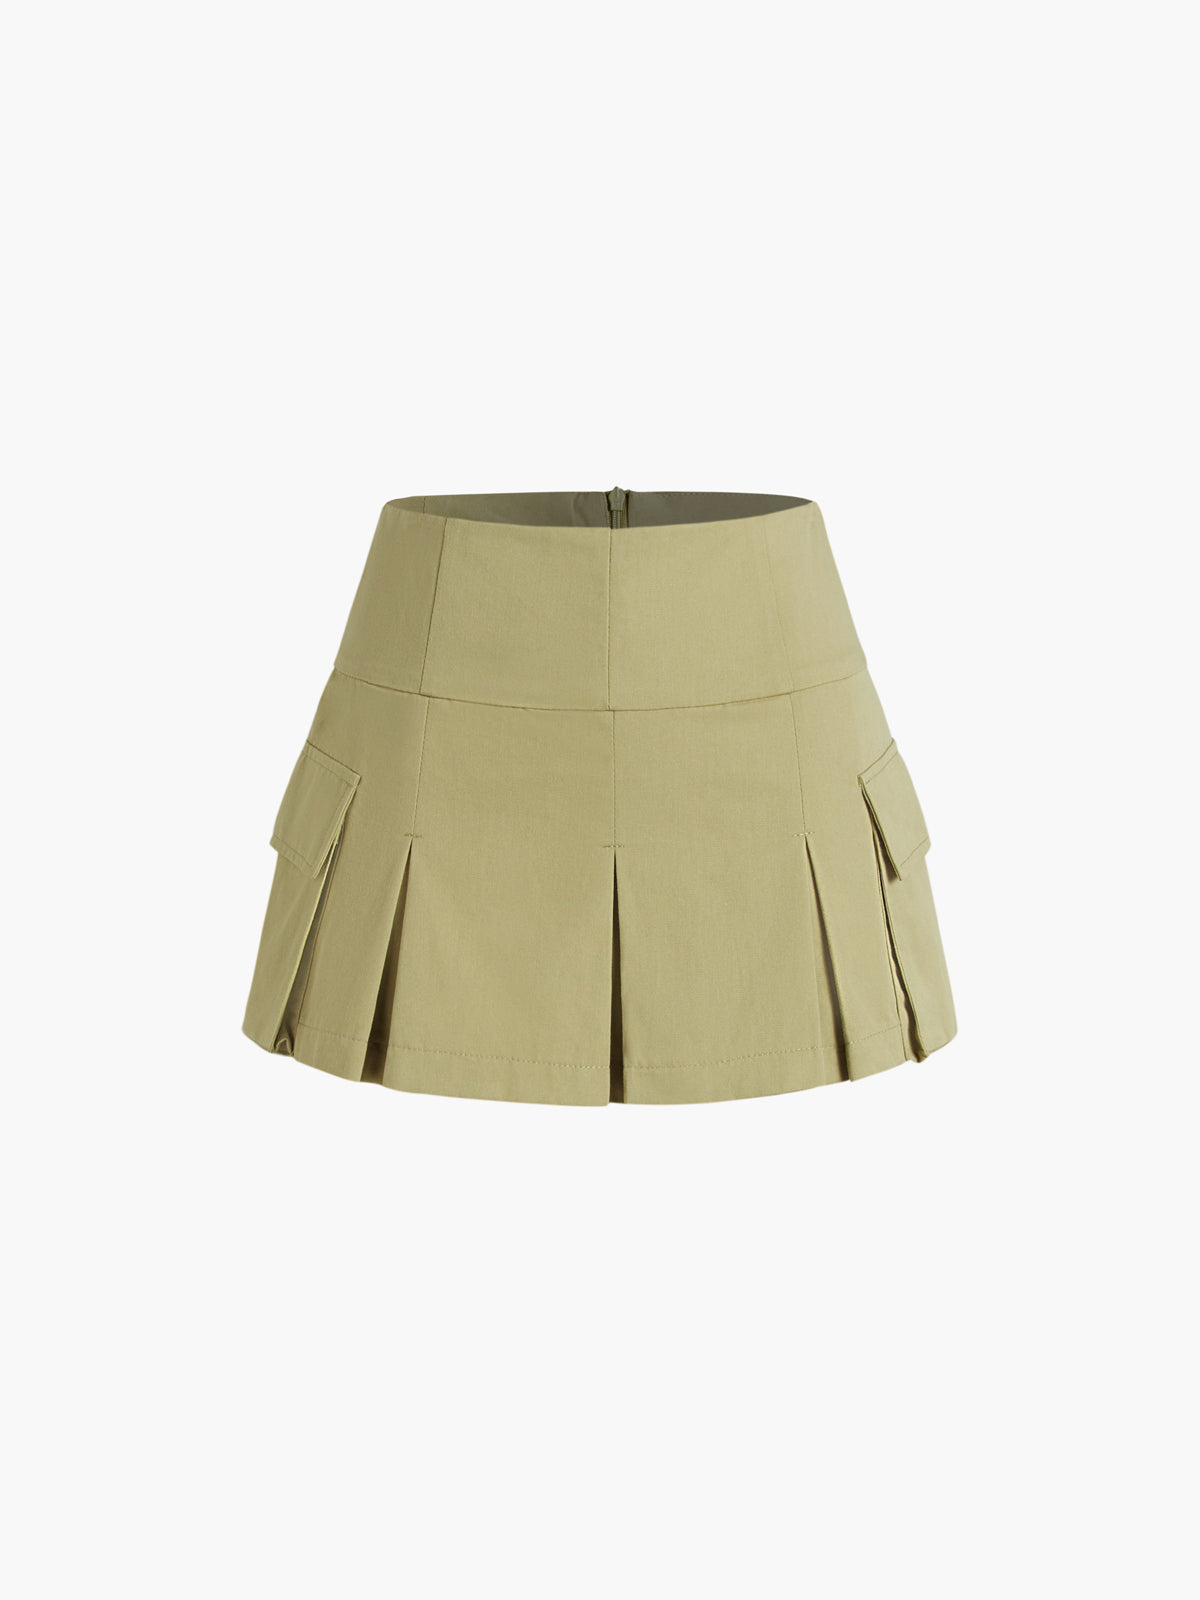 Zippered Cargo Pleat Skirt